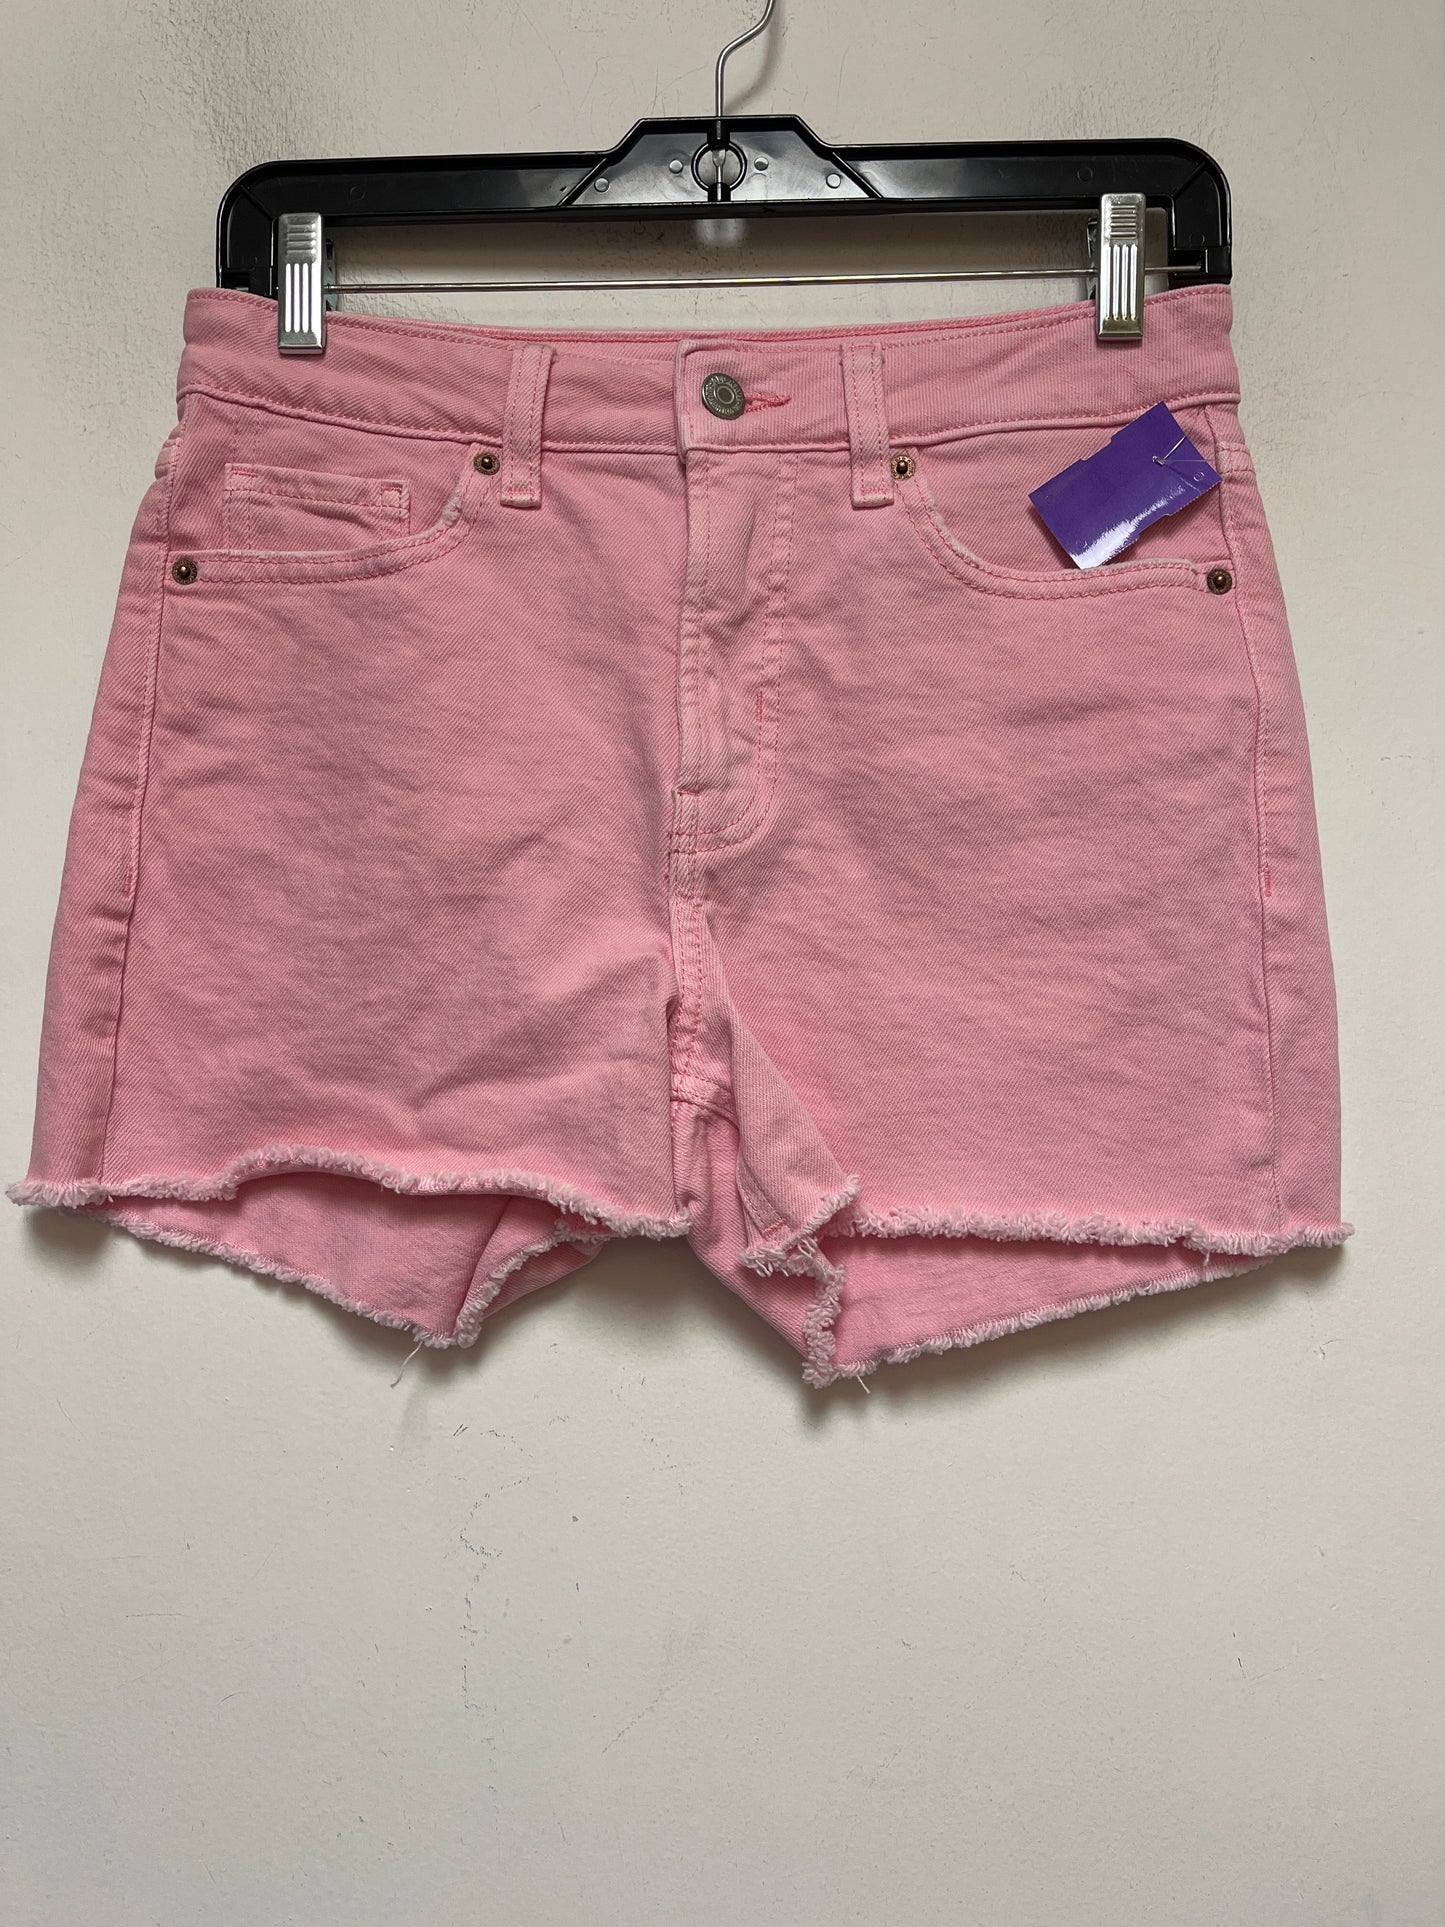 Pink Denim Shorts Old Navy, Size 0